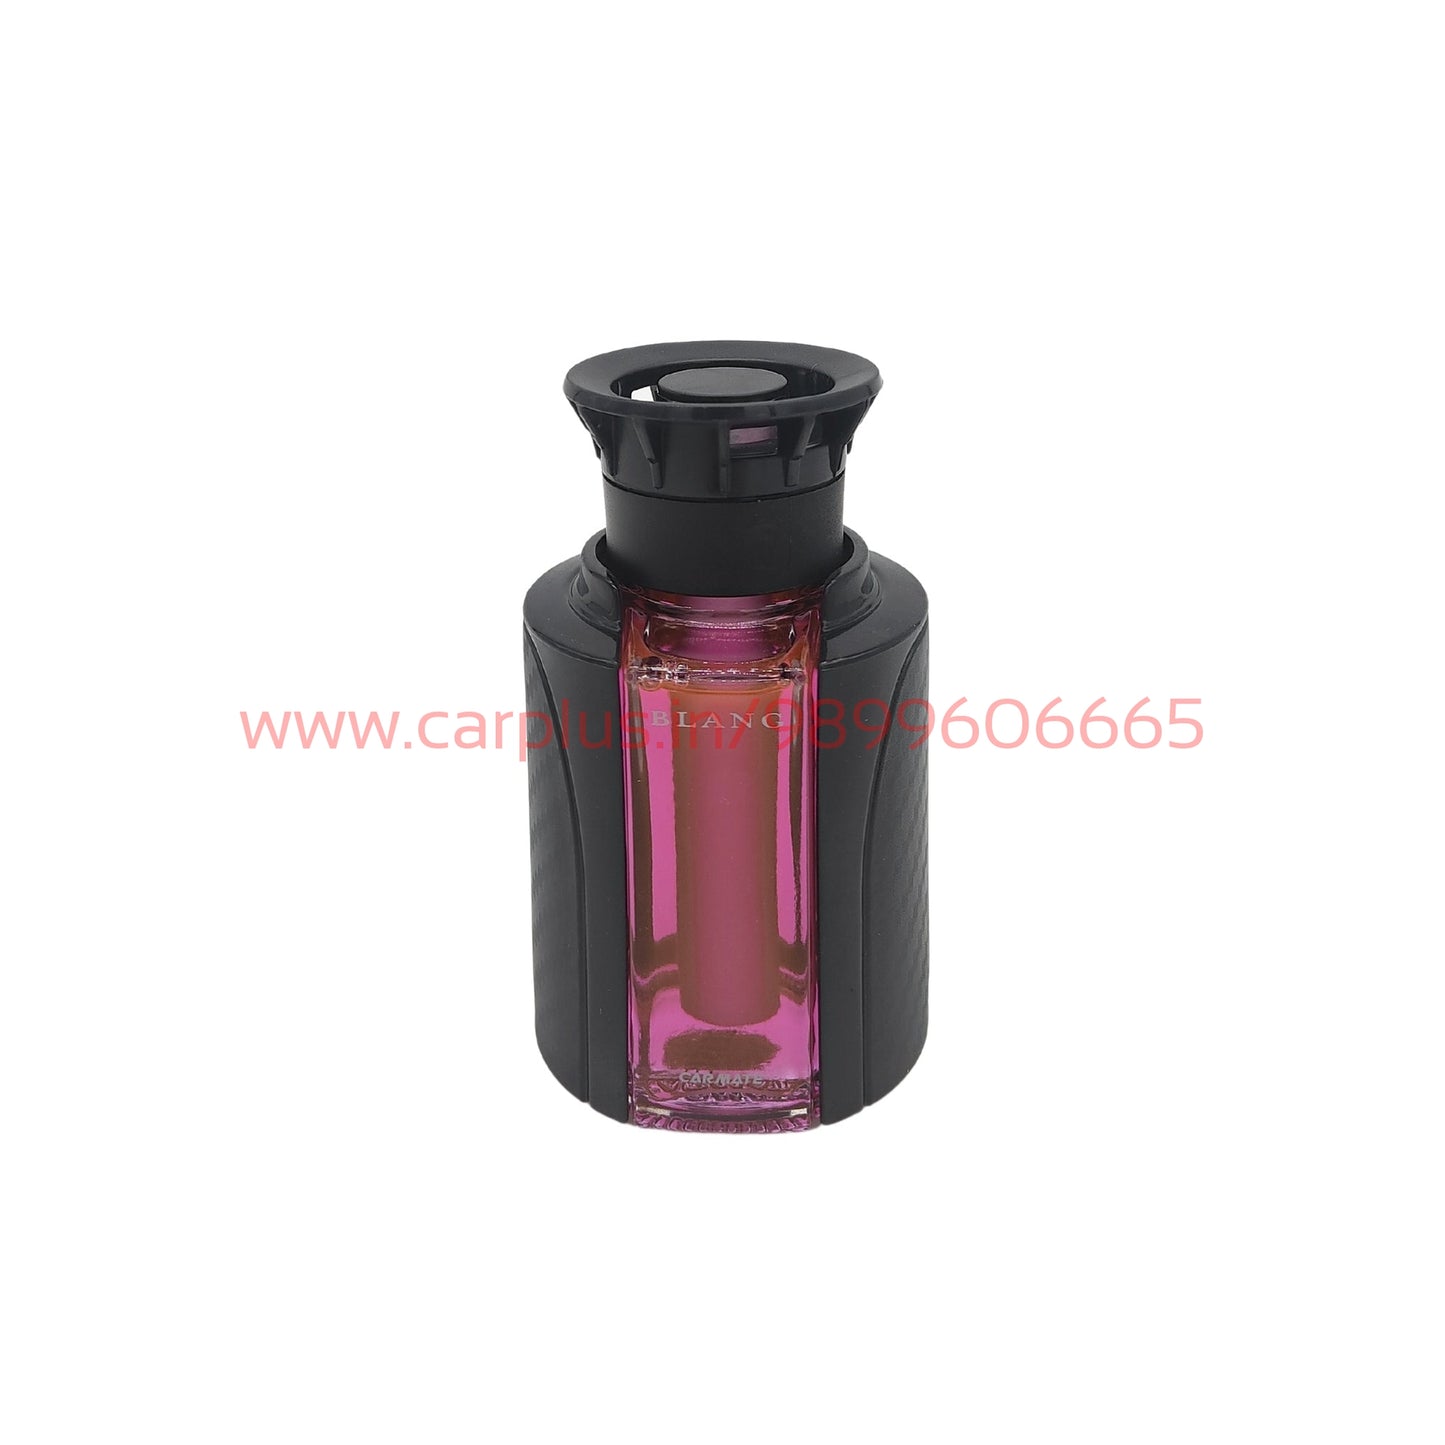 
                  
                    Carmate Blang Liquid Dashboard Perfume-DASHBOARD PERFUME-CARMATE-BLANG-WHITE MUSK (FE515)-CARPLUS
                  
                